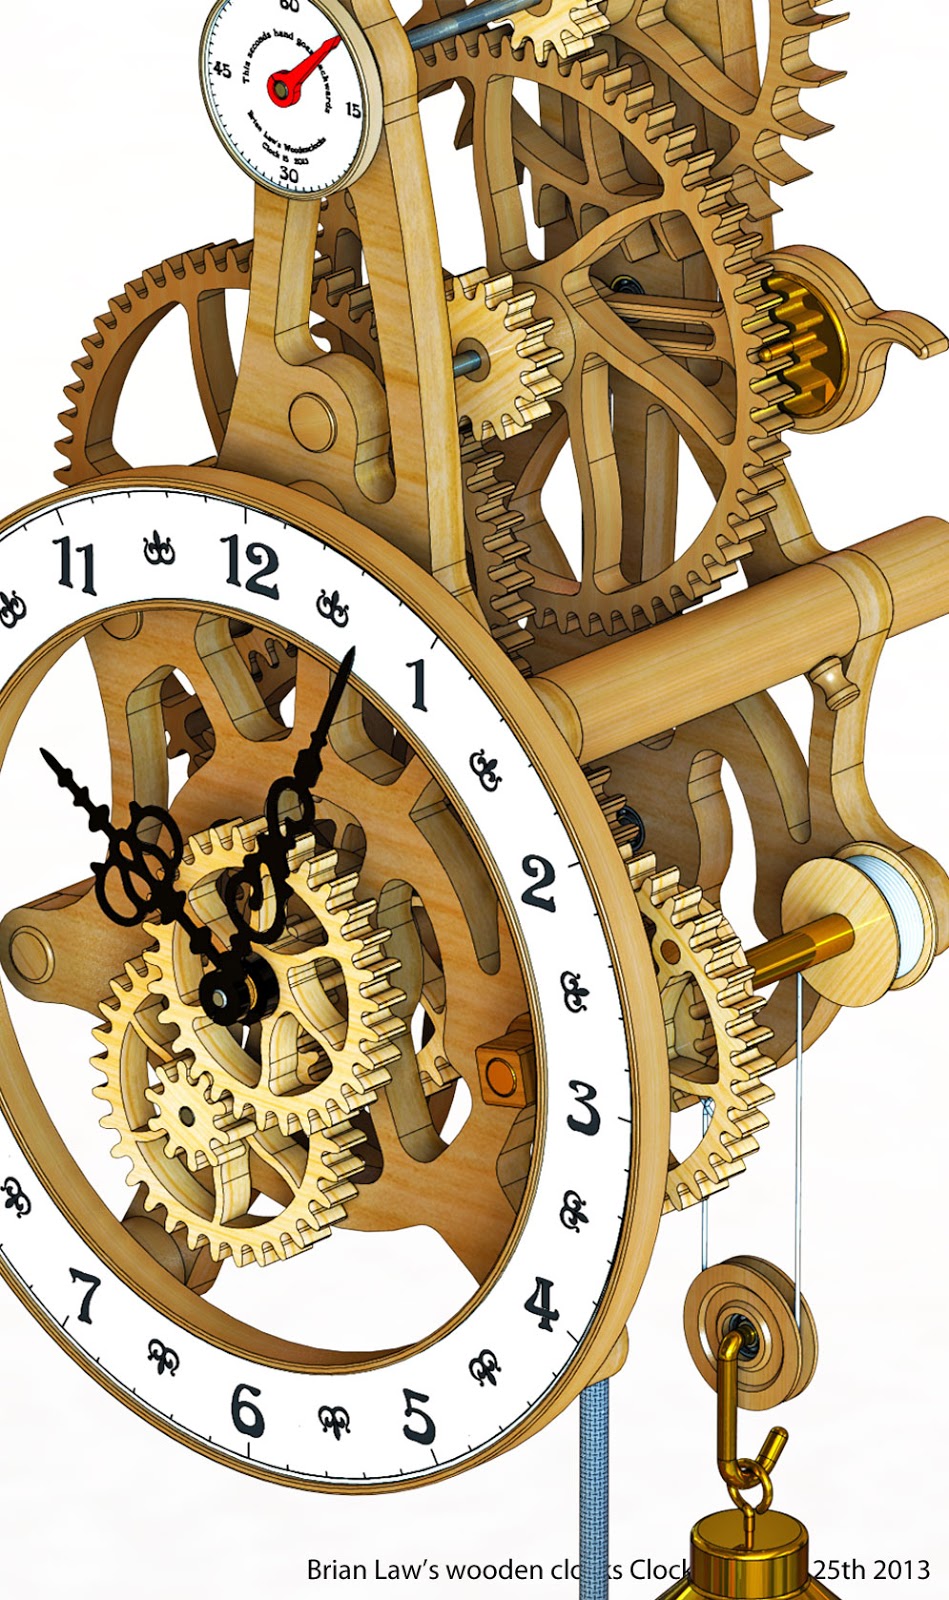 Wooden Clocks: Clock 15 - Latest developments